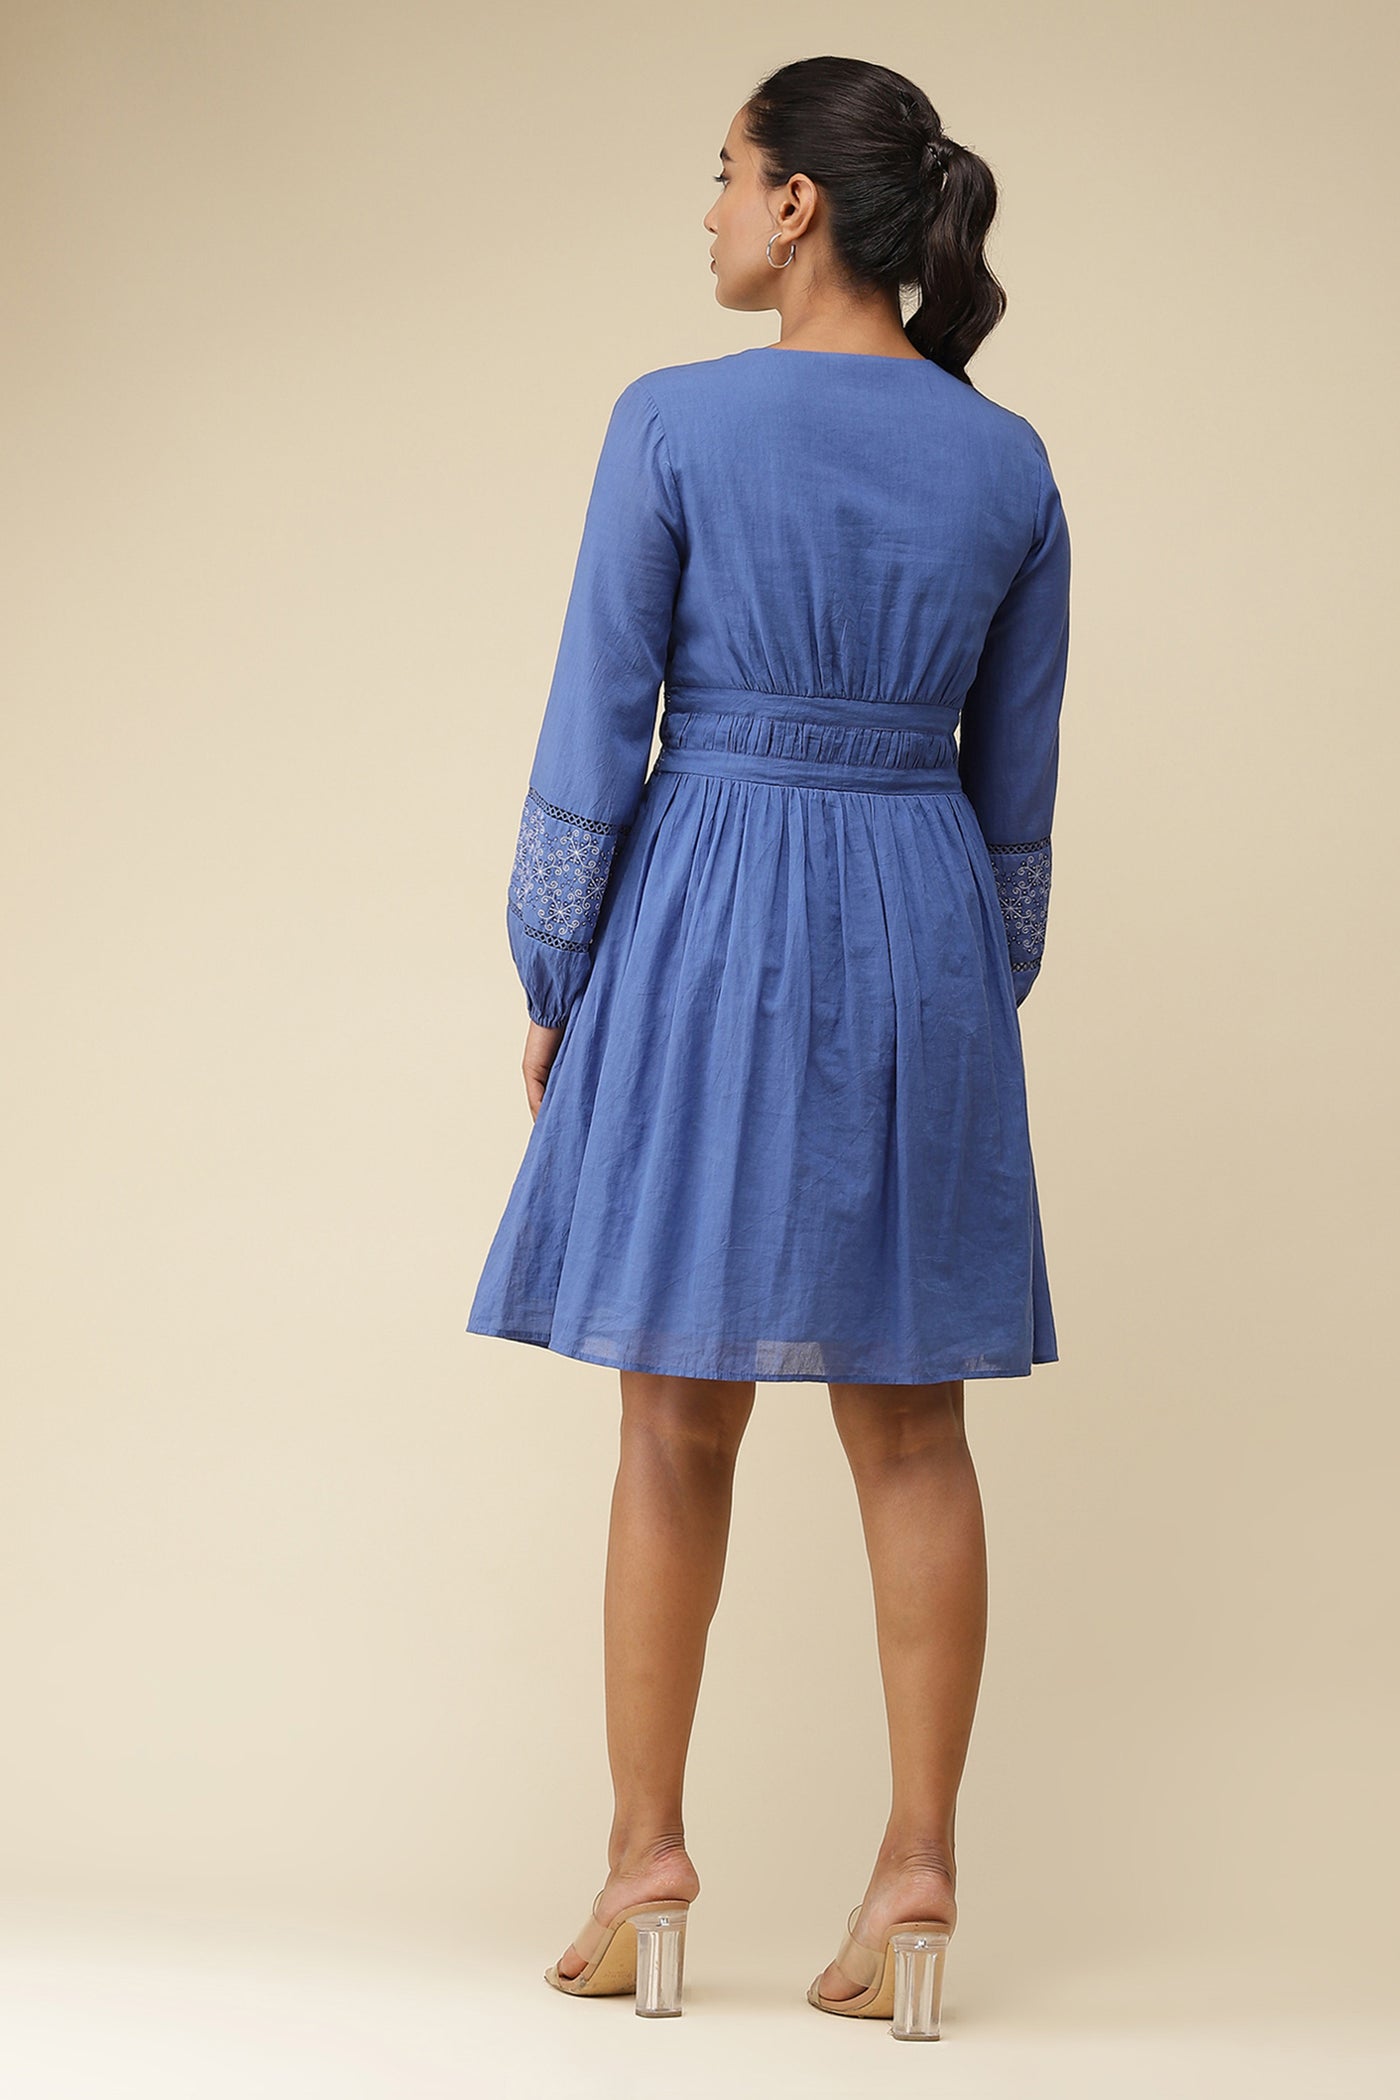 label ritu kumar Blue Embroidered Short Dress western  designer wear online shopping melange singapore